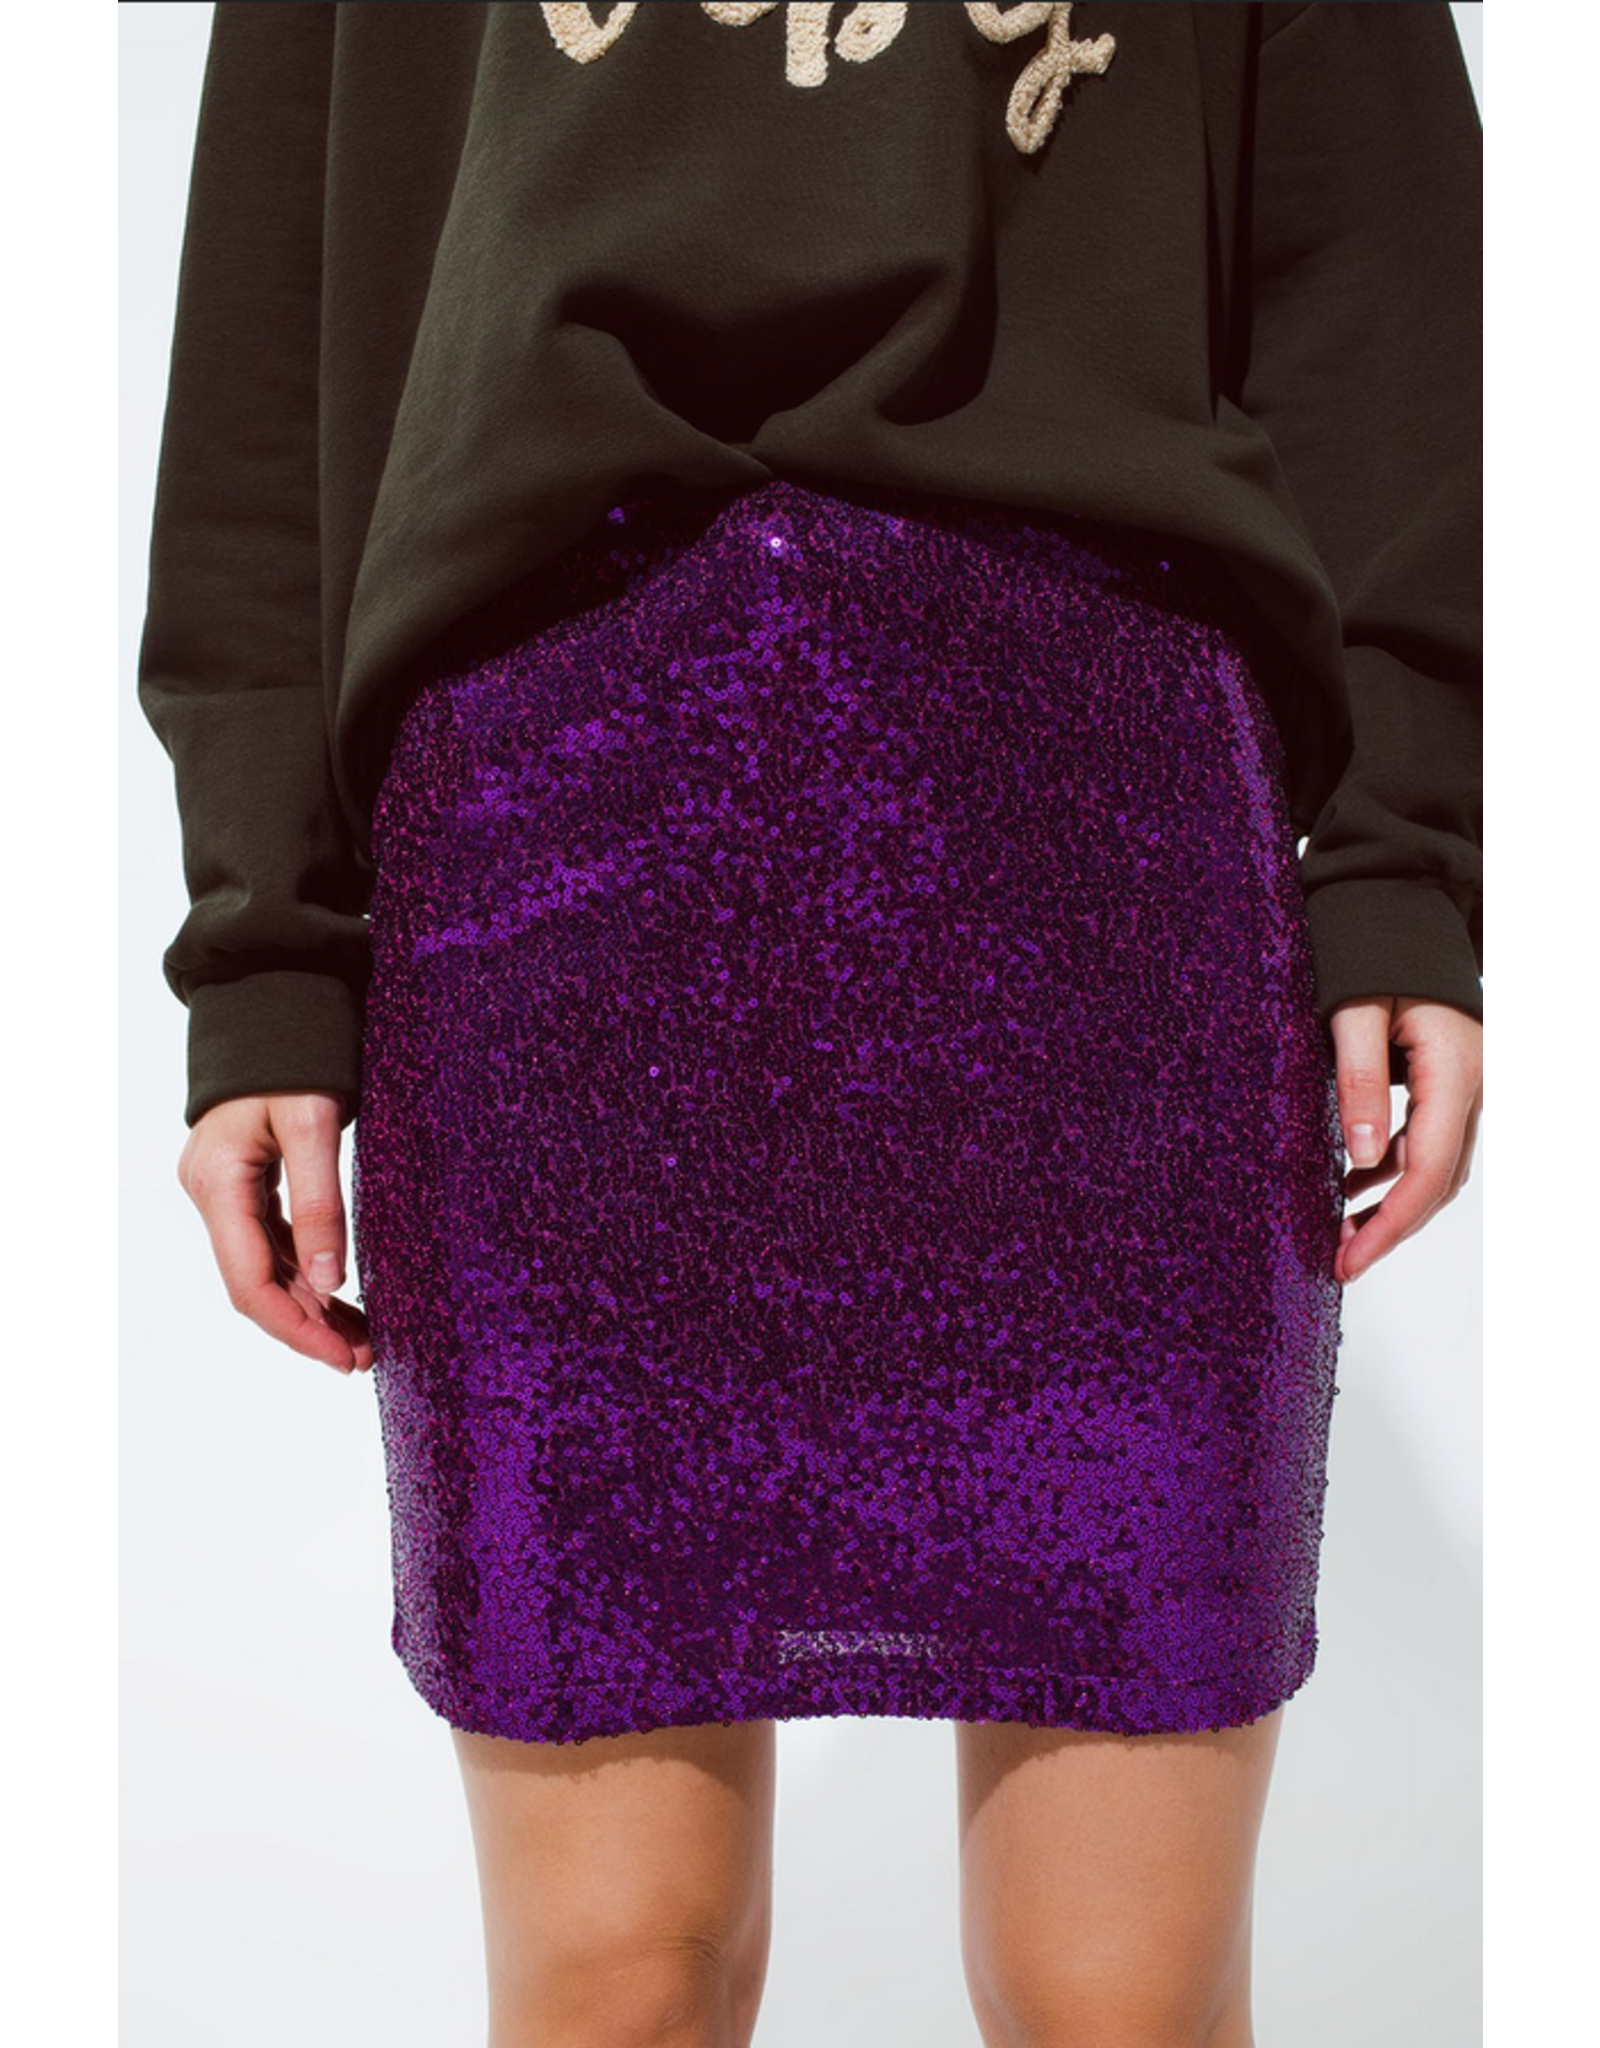 Q2 Purple Sequin Skirt